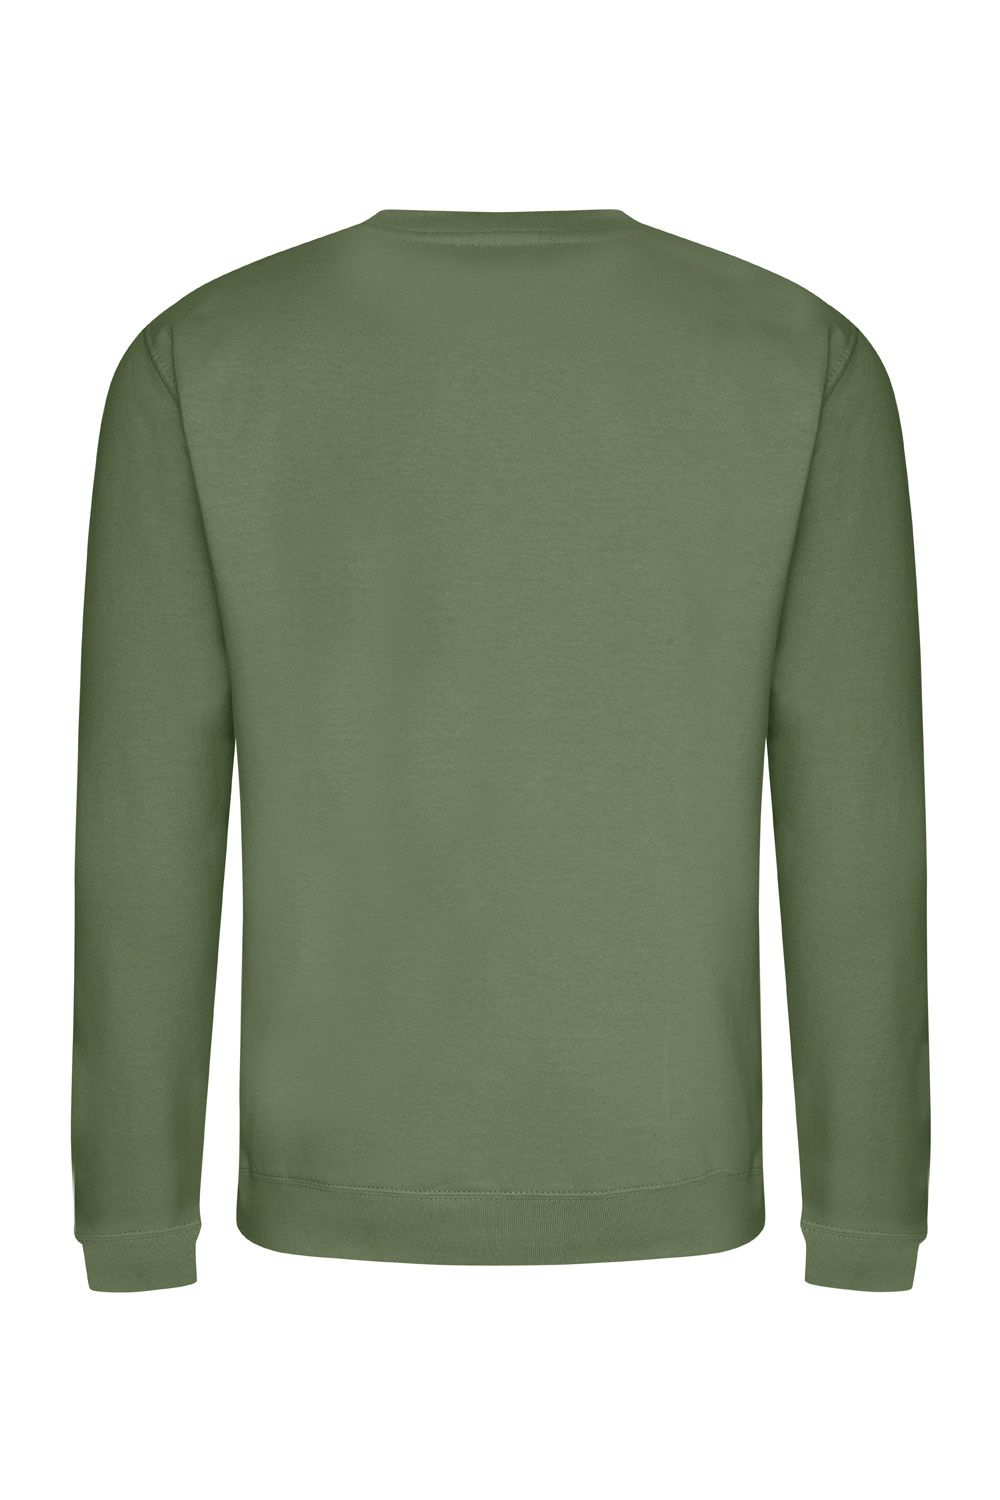 Beverly Hills Sweatshirt in Earthy Green (Custom Pack)